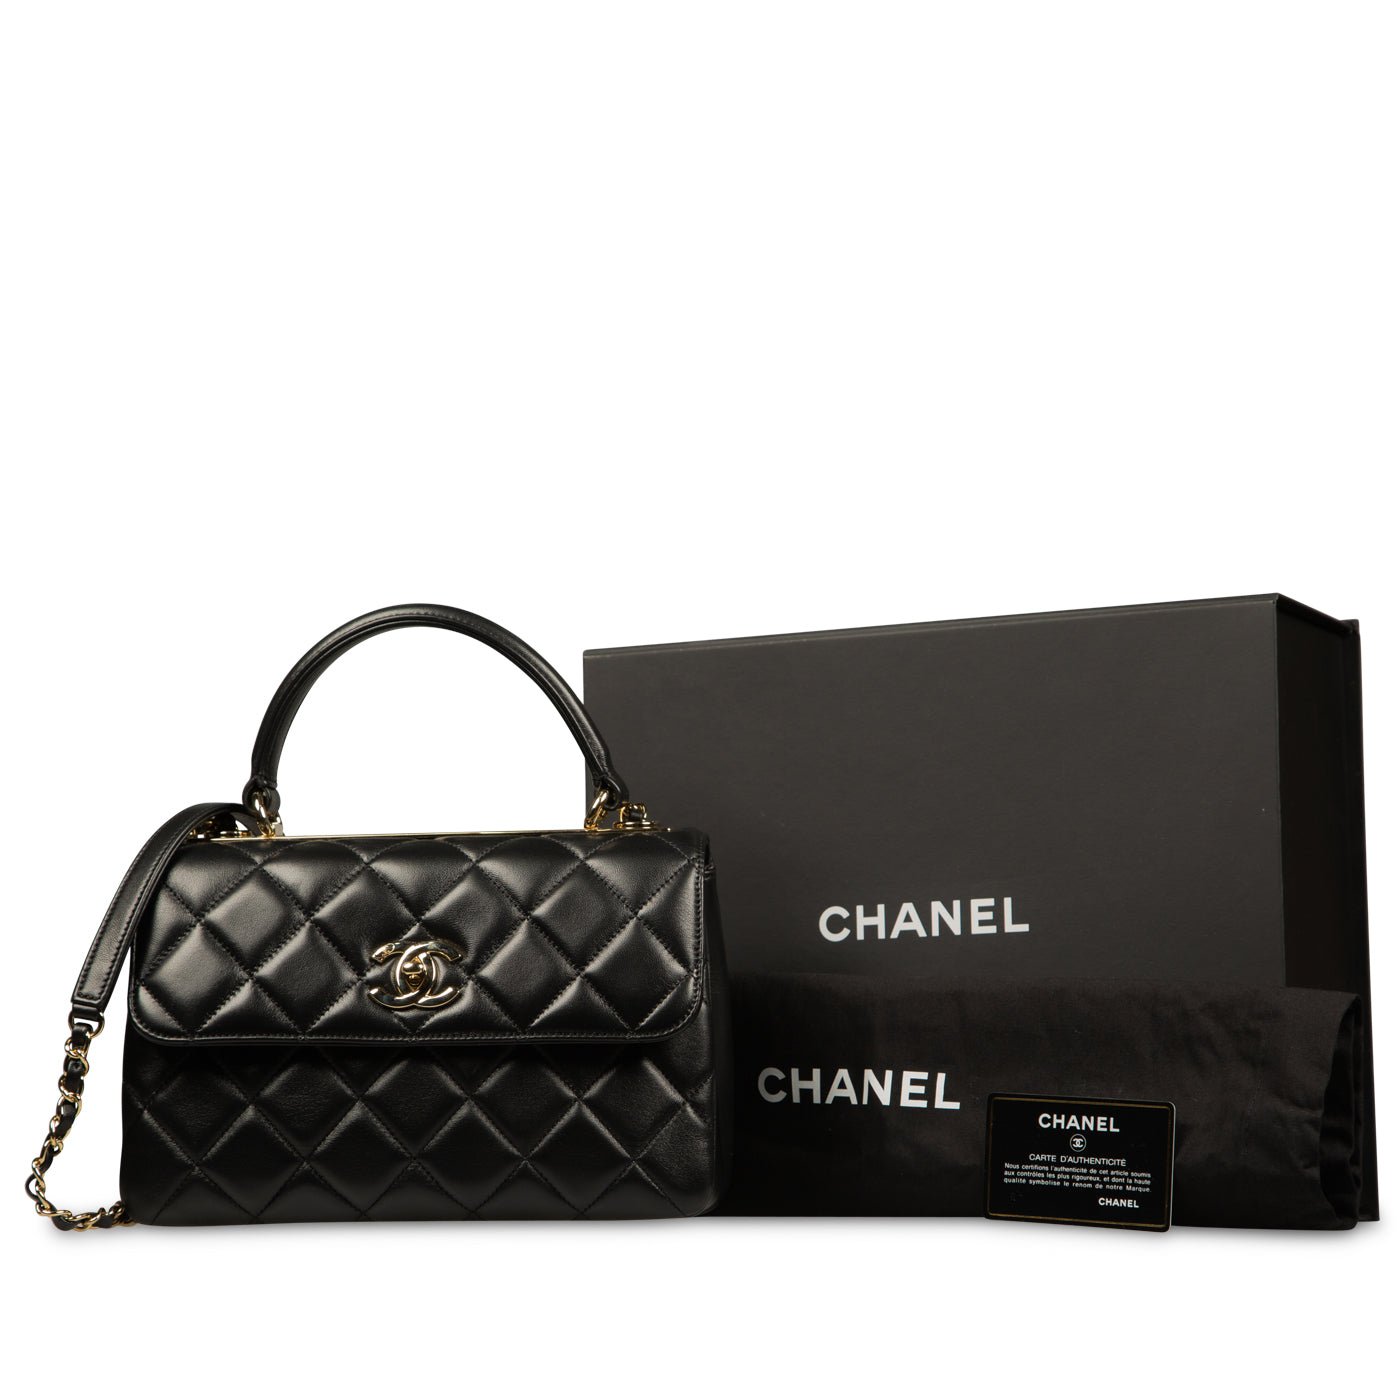 Chanel green small trendy top handle bag - BOPF